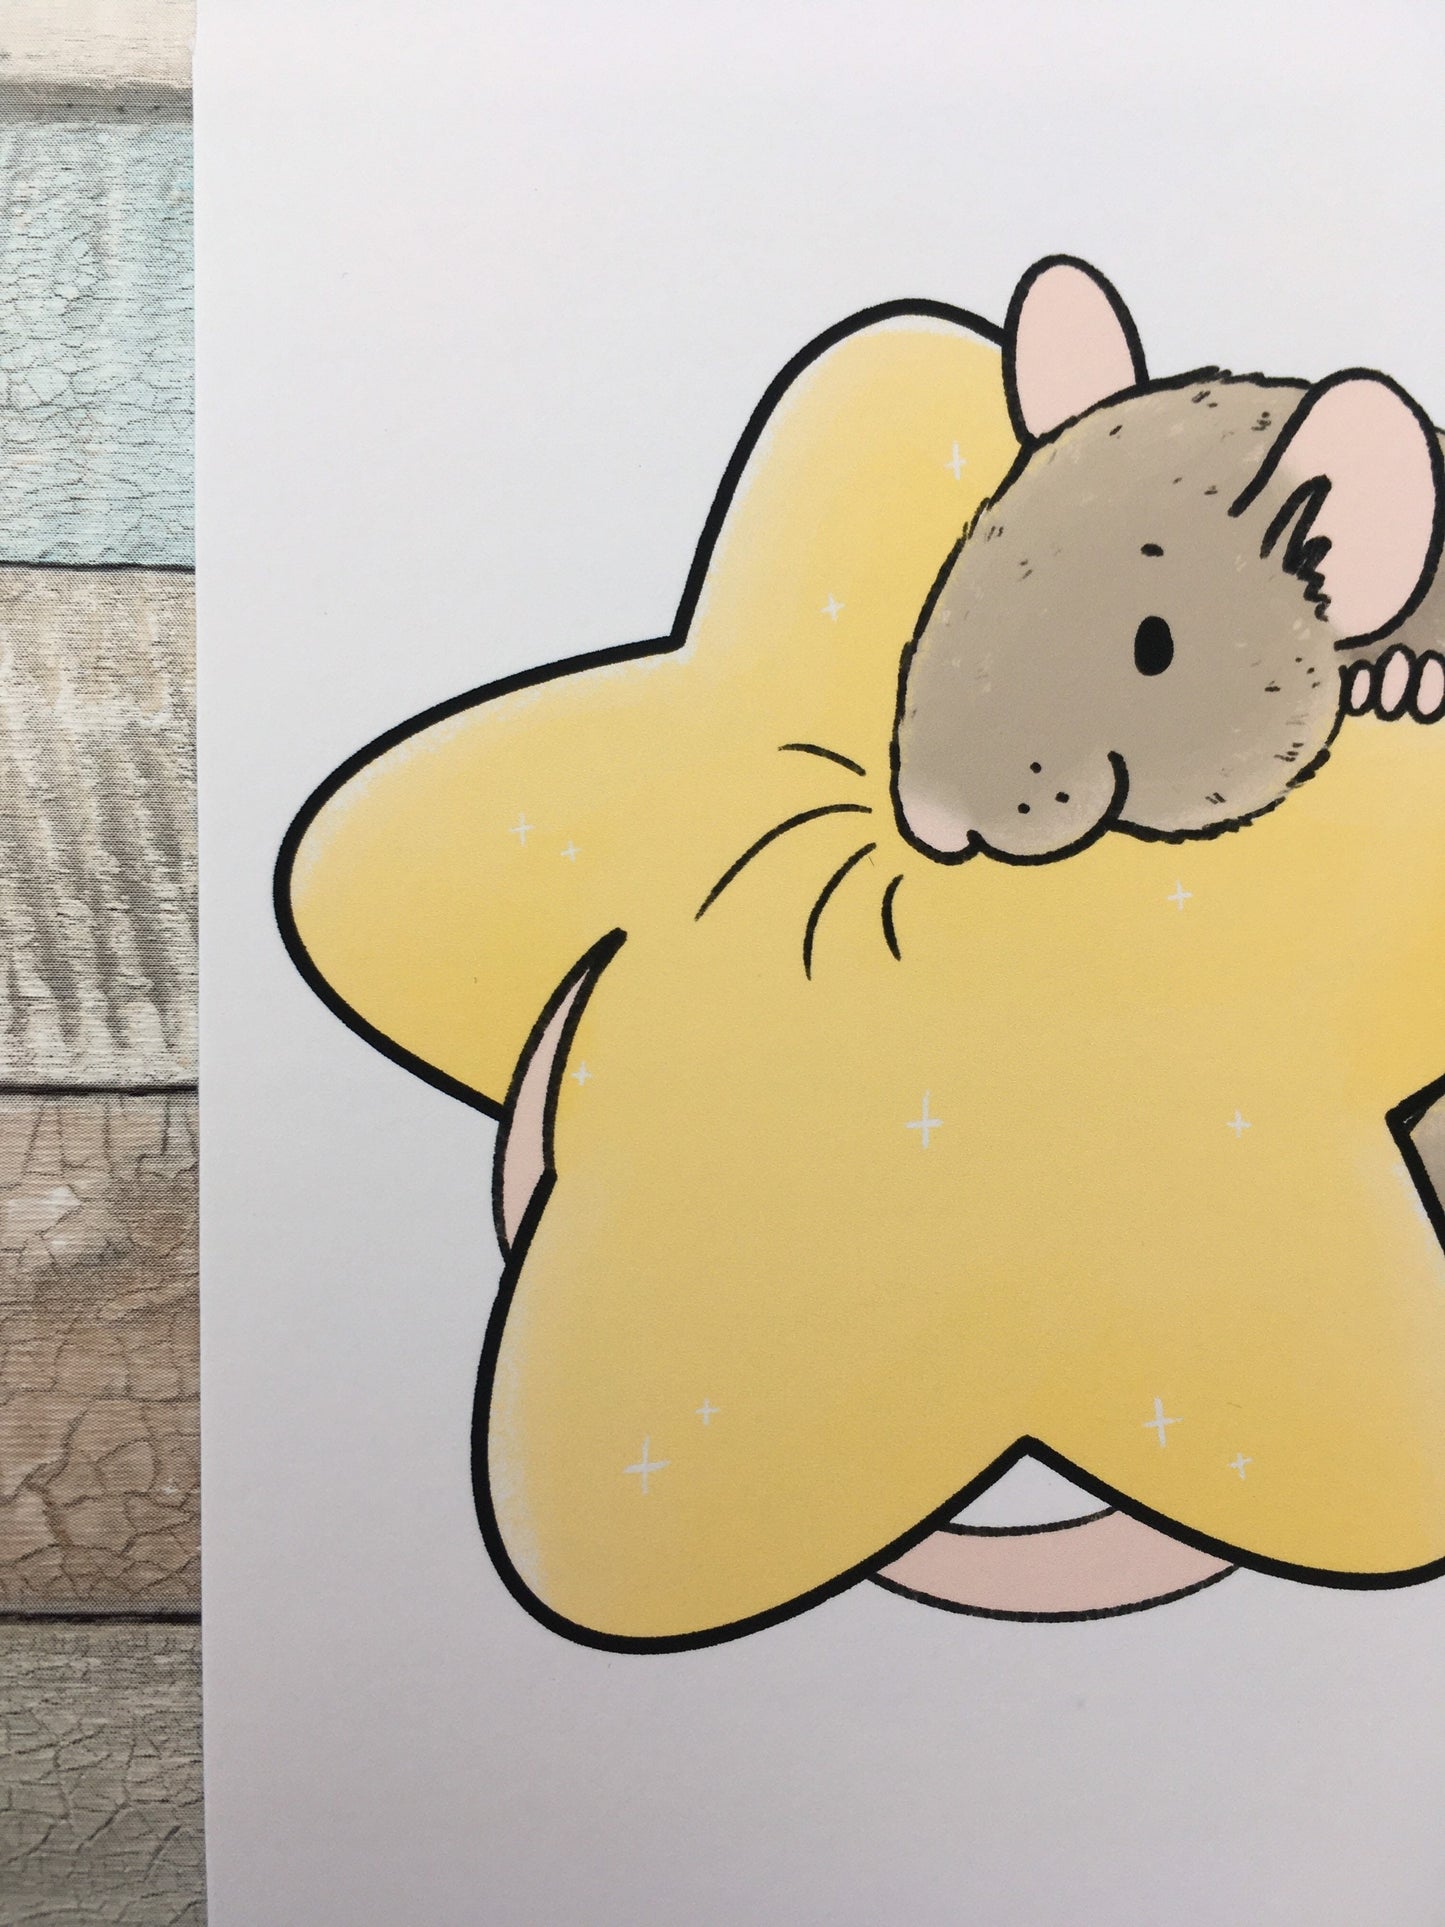 Star Space Rat Art Print - 6 x 4 Inch and A5 Sizes - Cute Rat Wall Art - Fancy Rat Gift